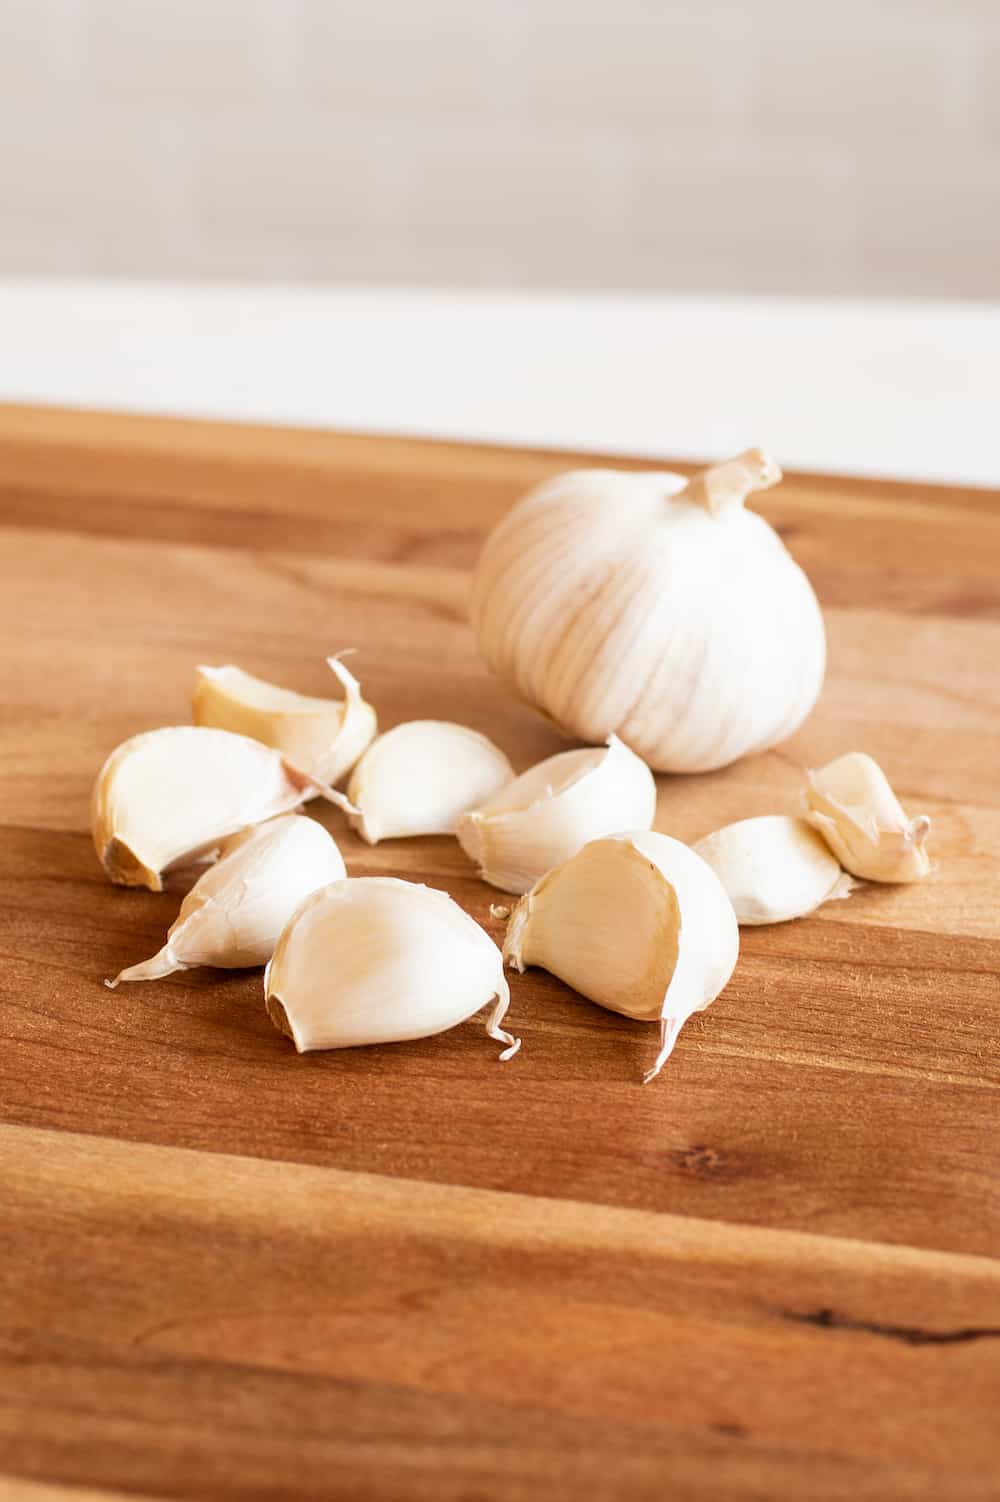 Can You Freeze Garlic? Yes!